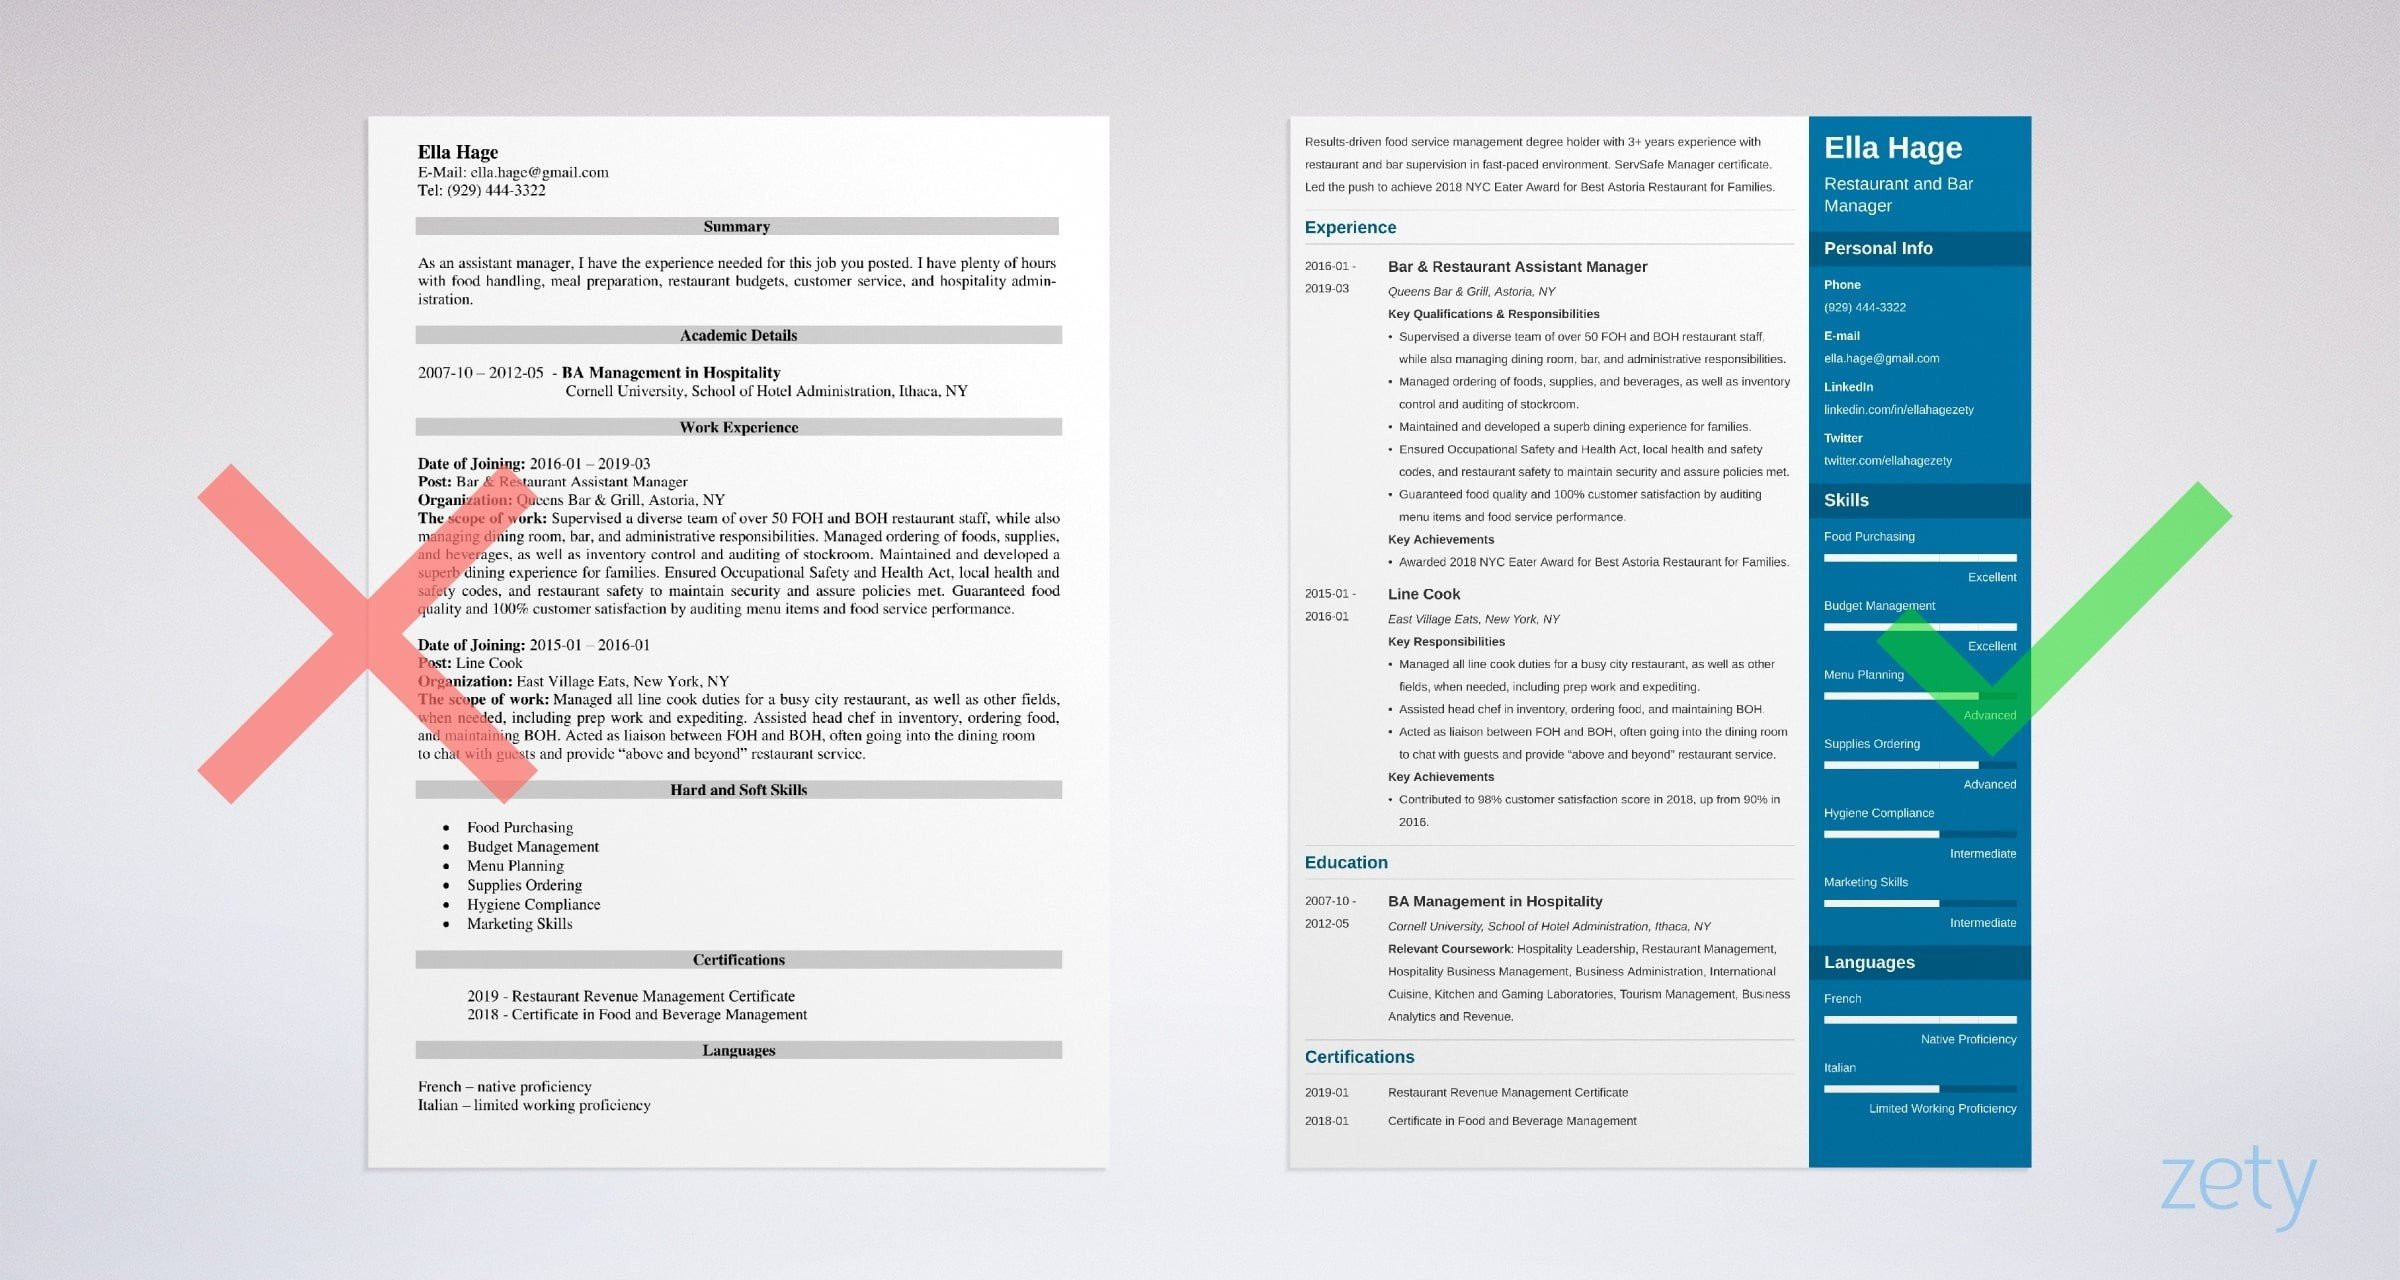 Sample Resume Objectives for Expeditors Of Liquor Restaurant Manager Resume Examples: Job Description, Skills